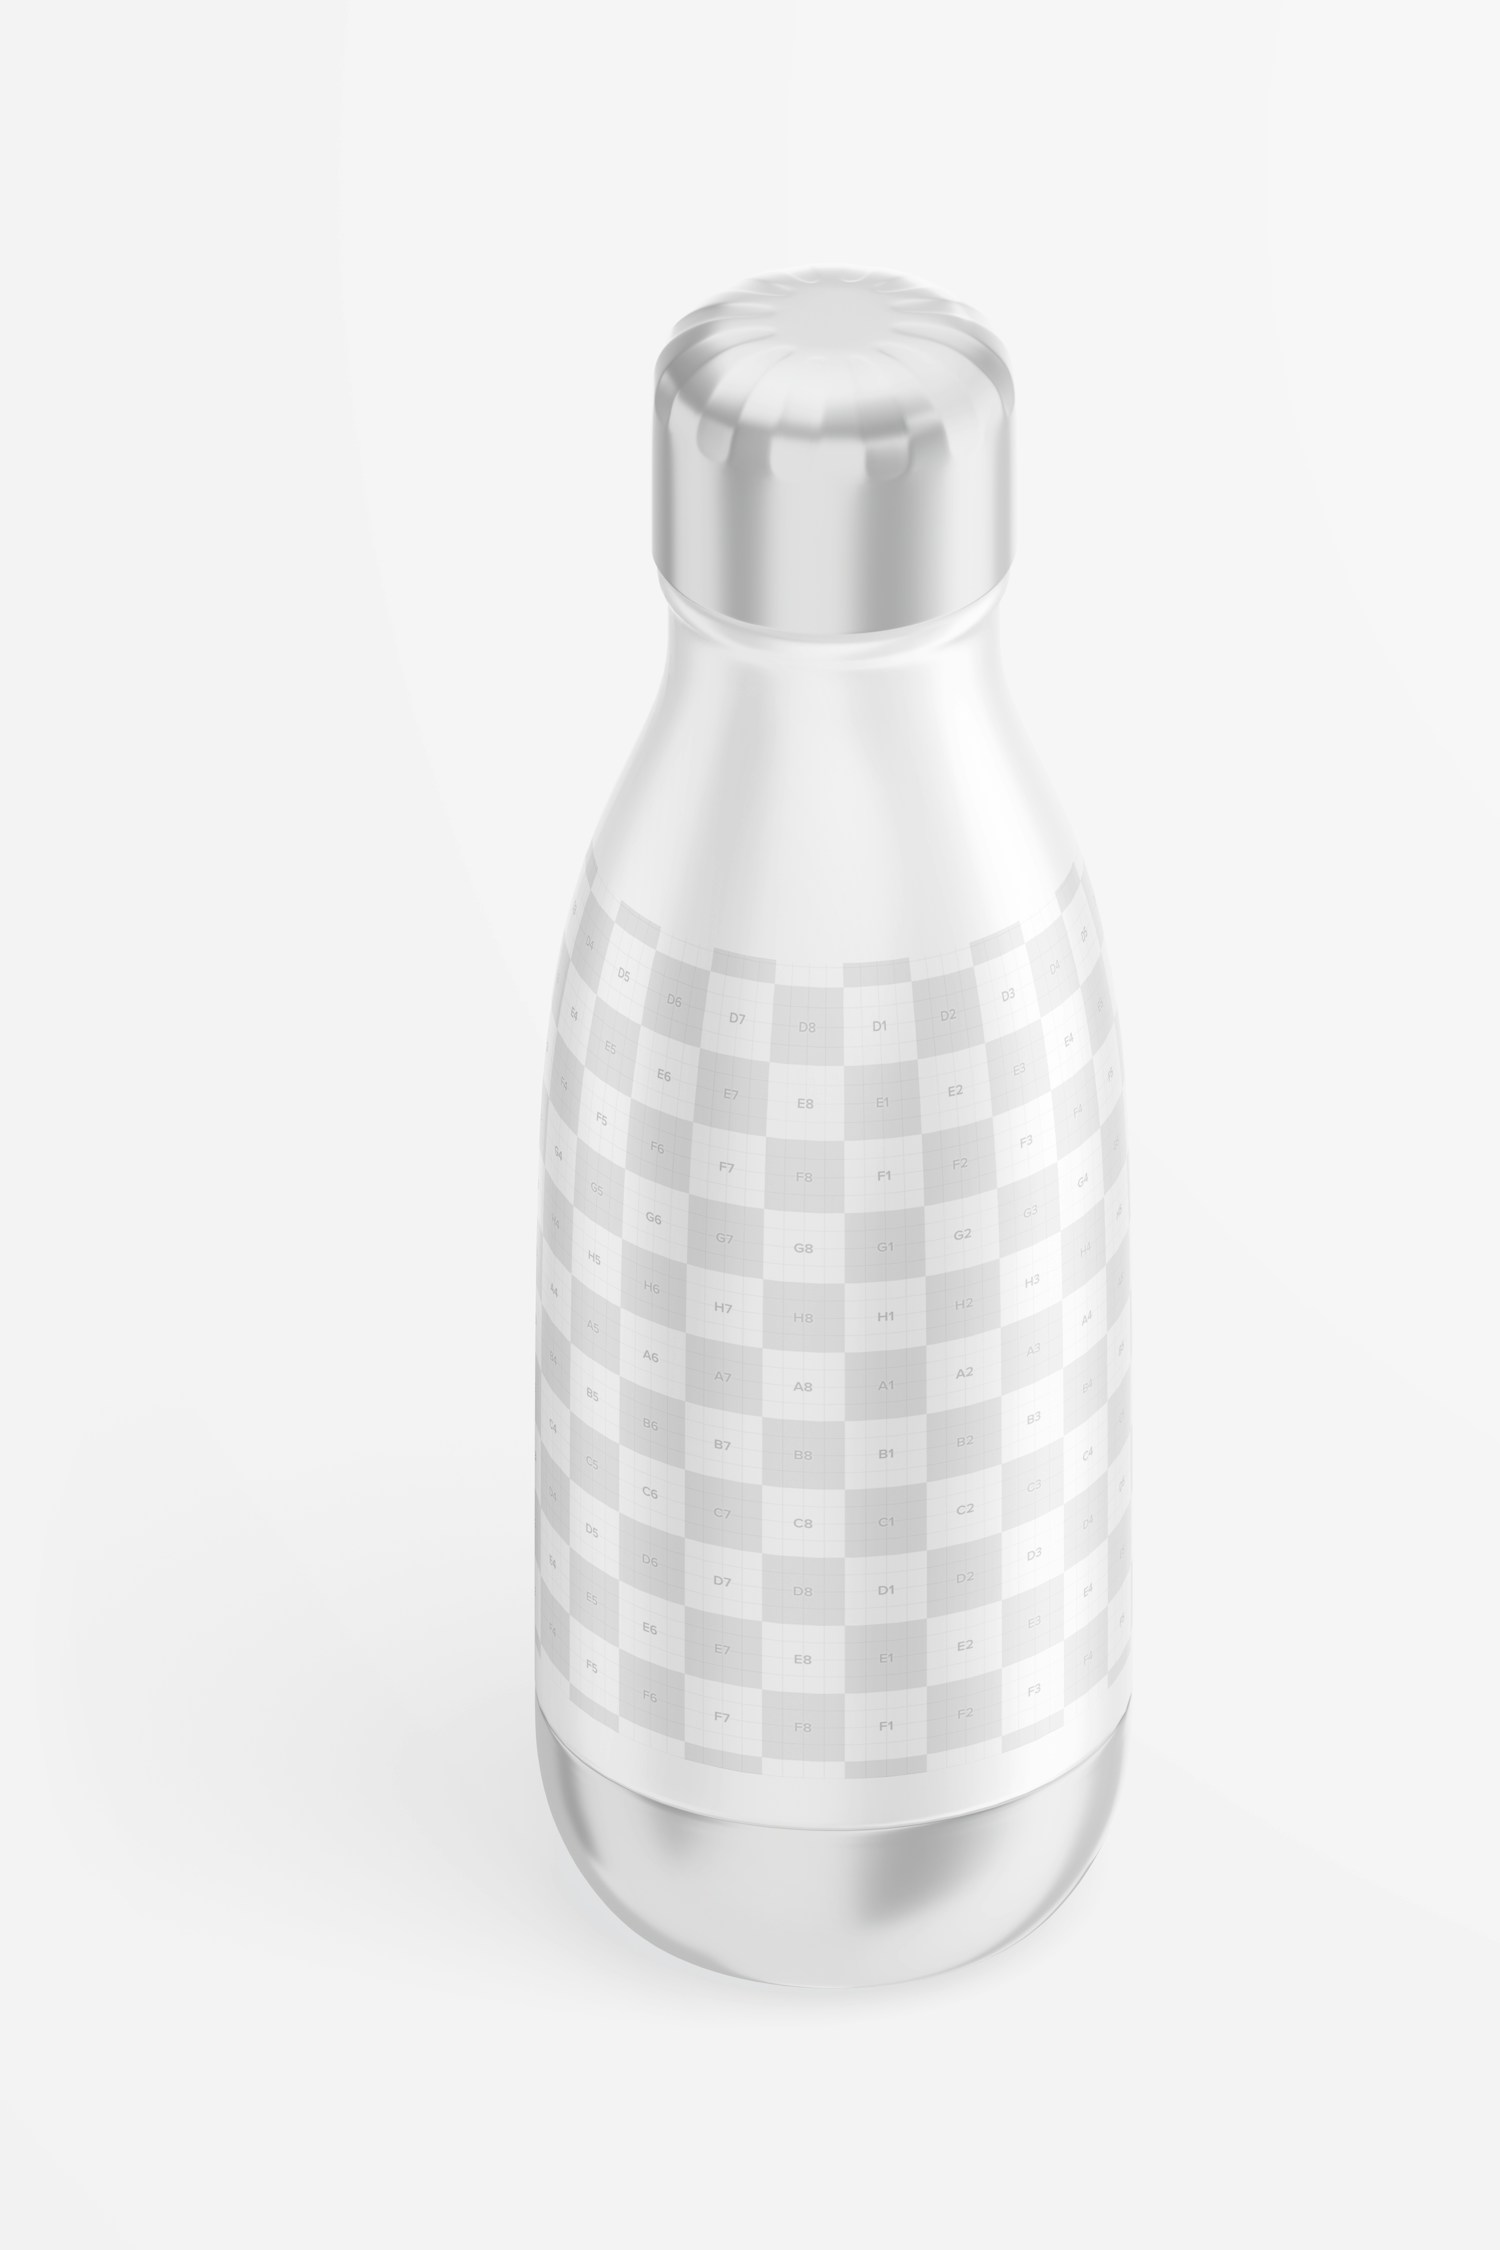 17 oz Metallic Water Bottles Mockup, Isometric View